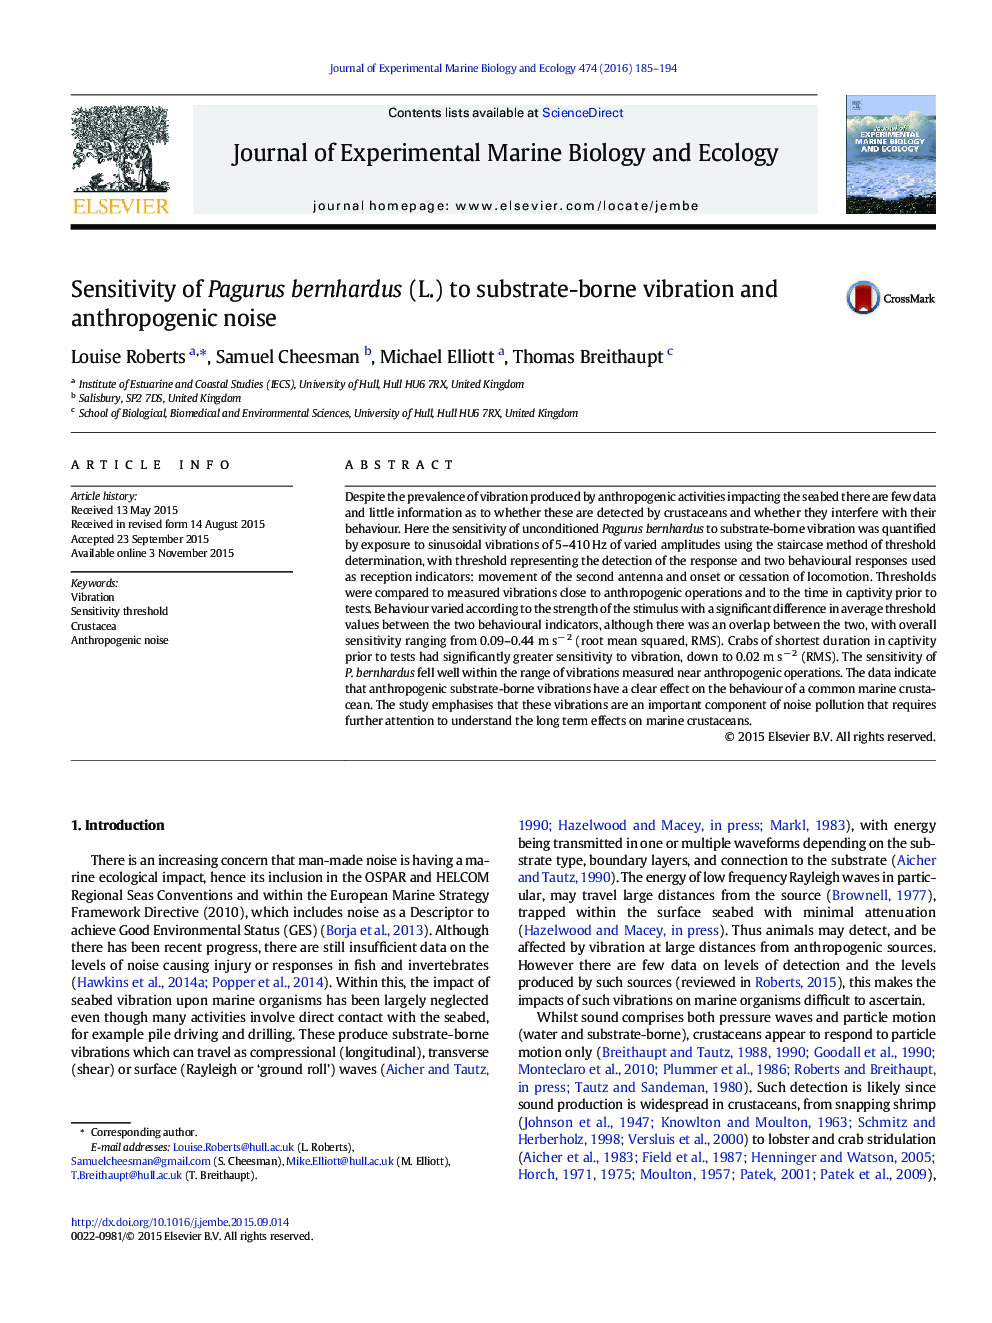 Sensitivity of Pagurus bernhardus (L.) to substrate-borne vibration and anthropogenic noise